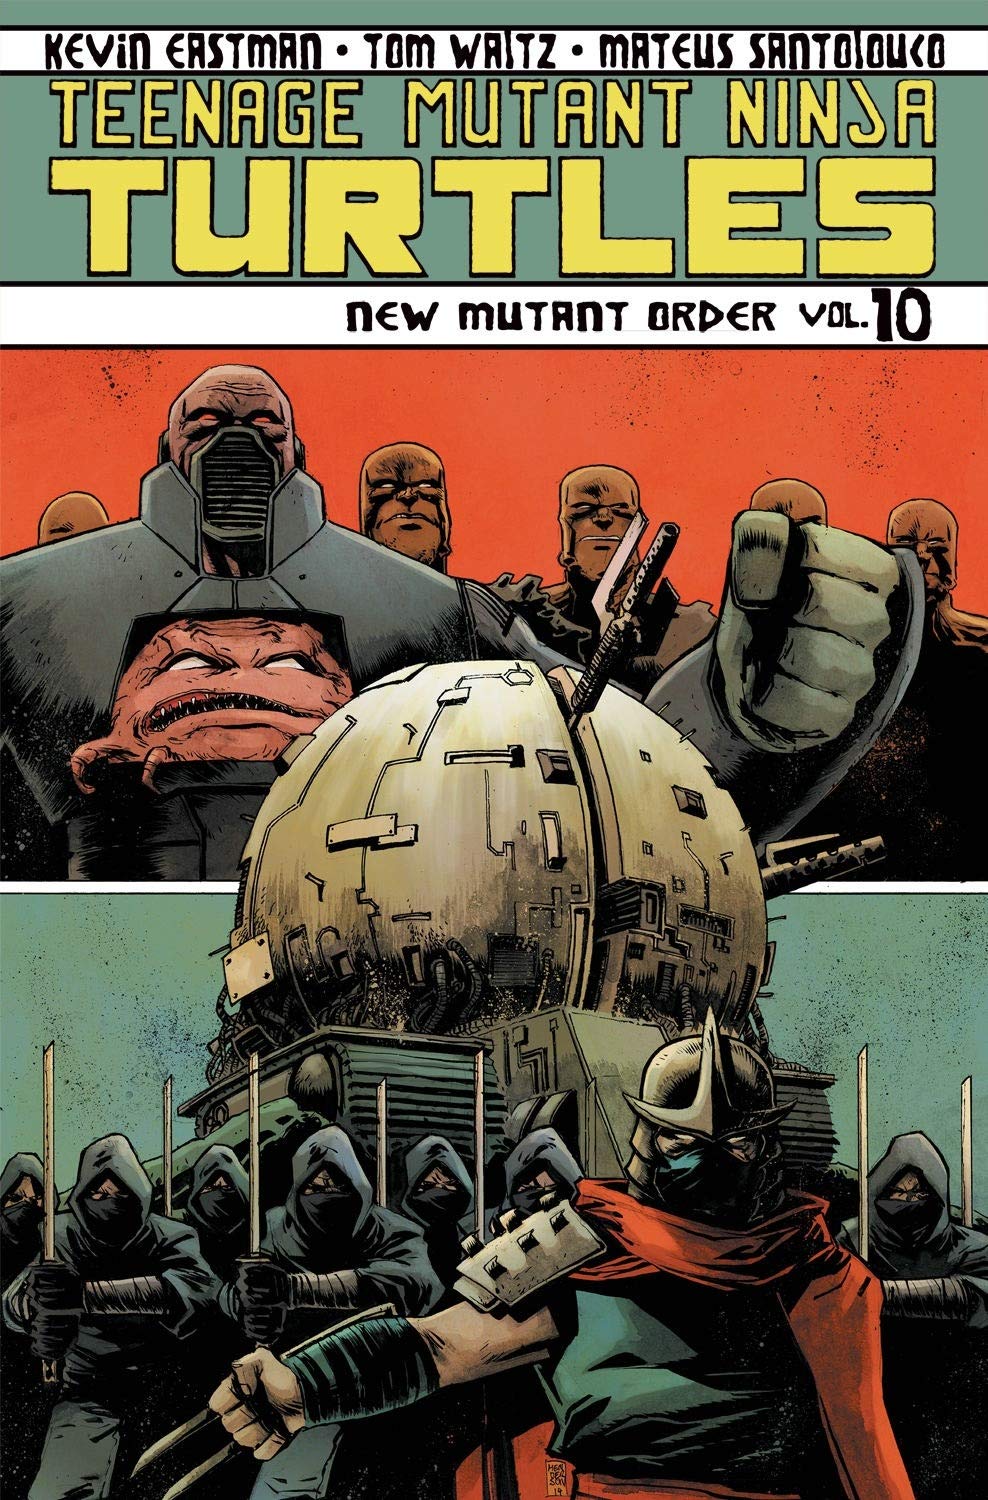 Teenage Mutant Ninja Turtles Vol. 10 - New Mutant Order | Kevin Eastman, Tom Waltz